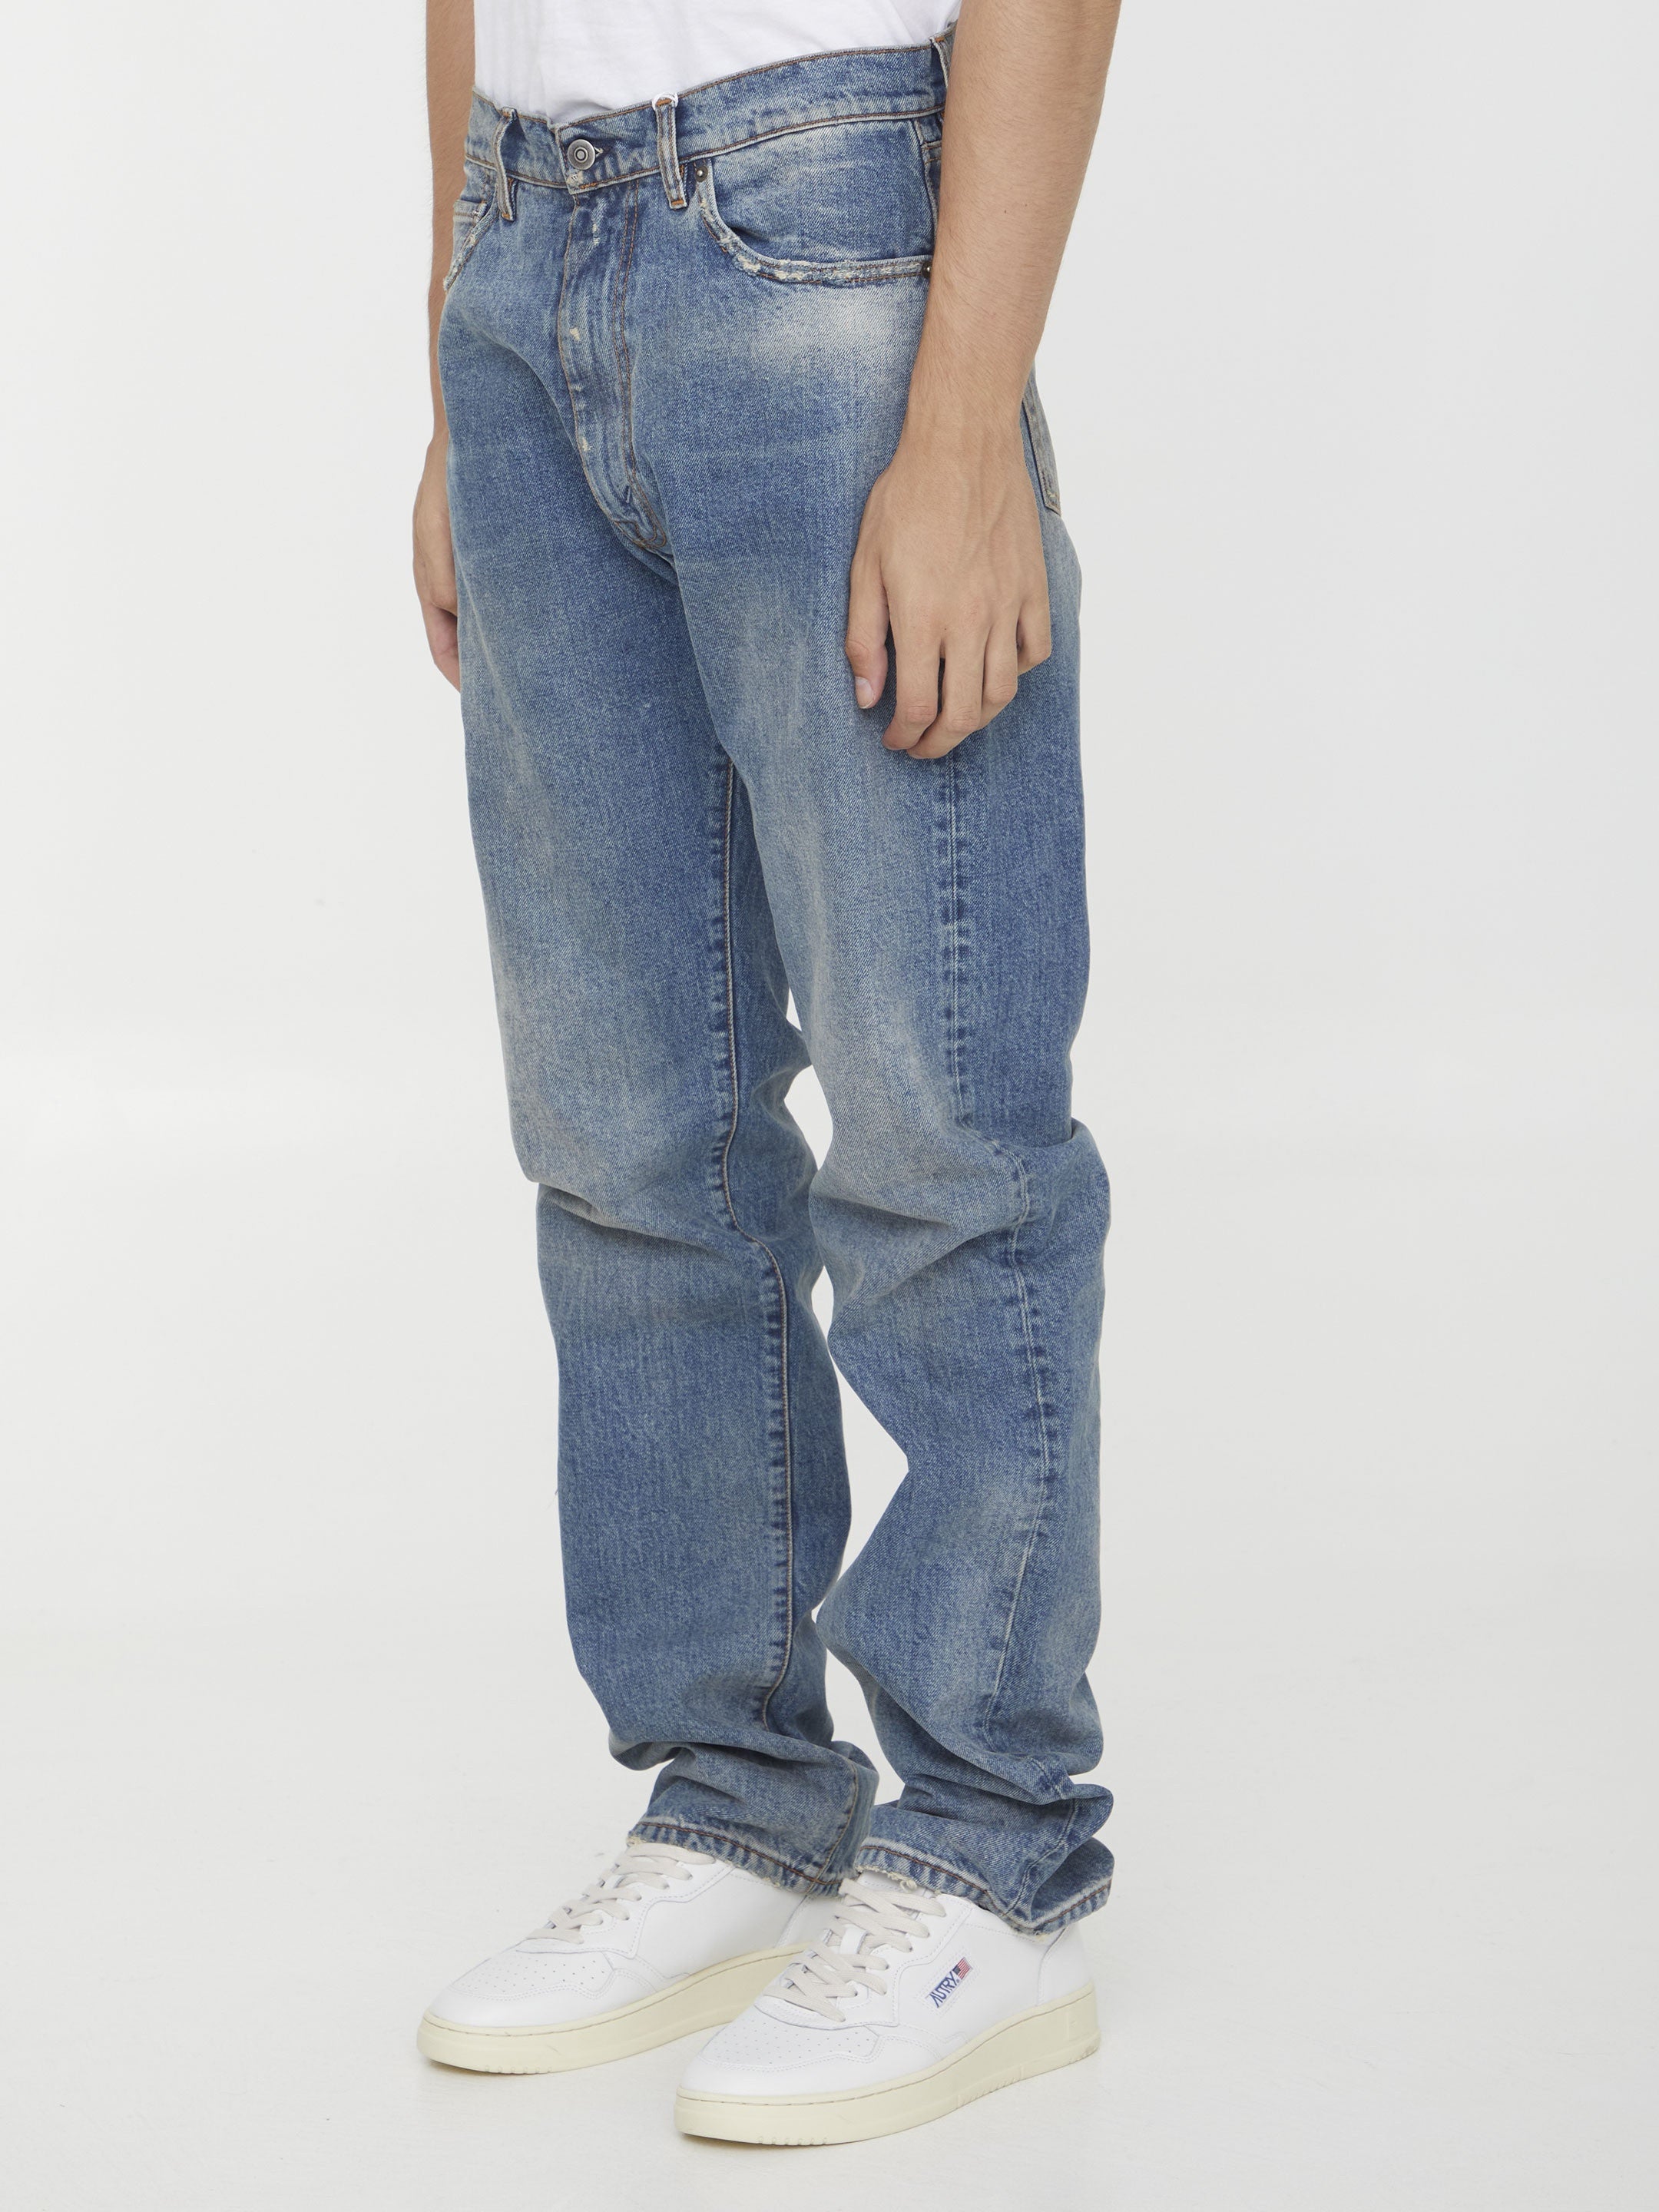 MAISON-MARGIELA-OUTLET-SALE-Distressed-denim-jeans-Jeans-ARCHIVE-COLLECTION-2.jpg